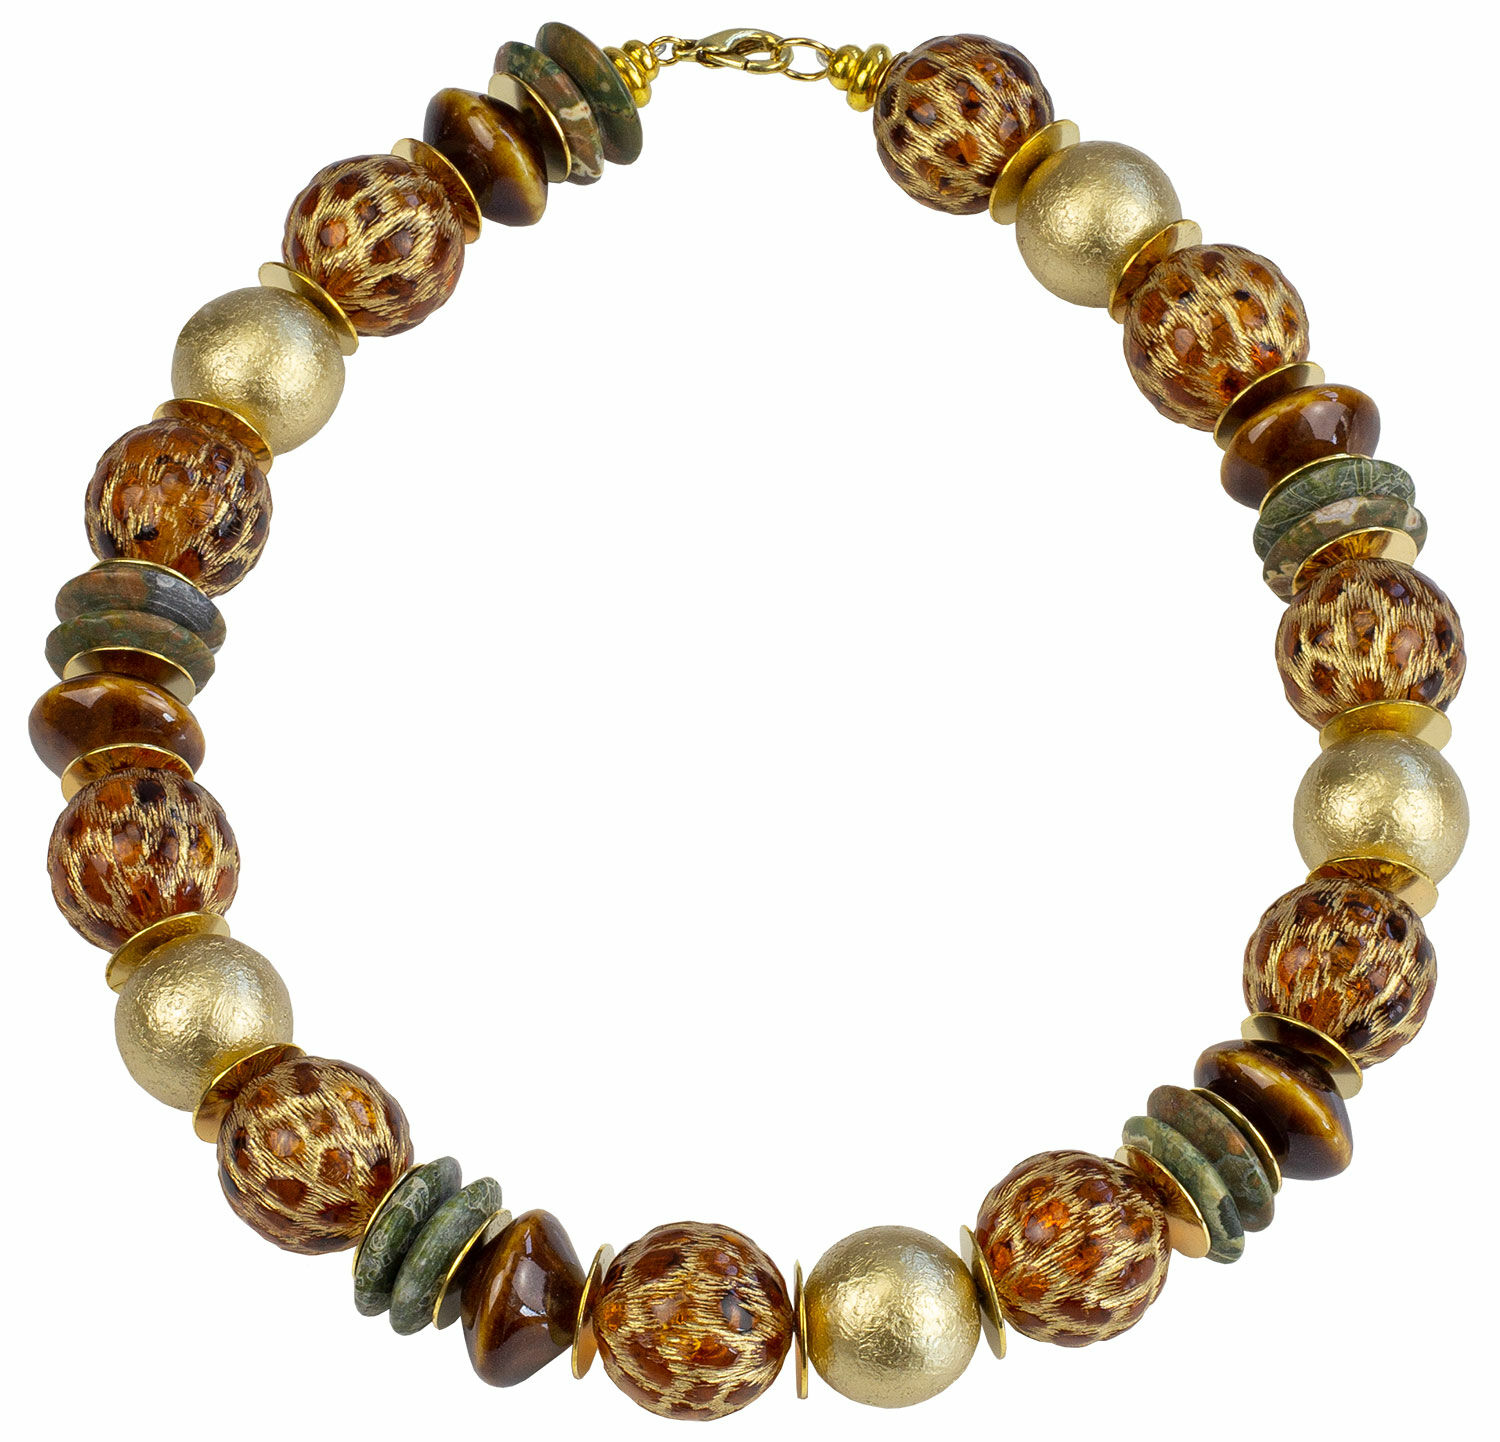 Pearl necklace "Maya" by Anna Mütz